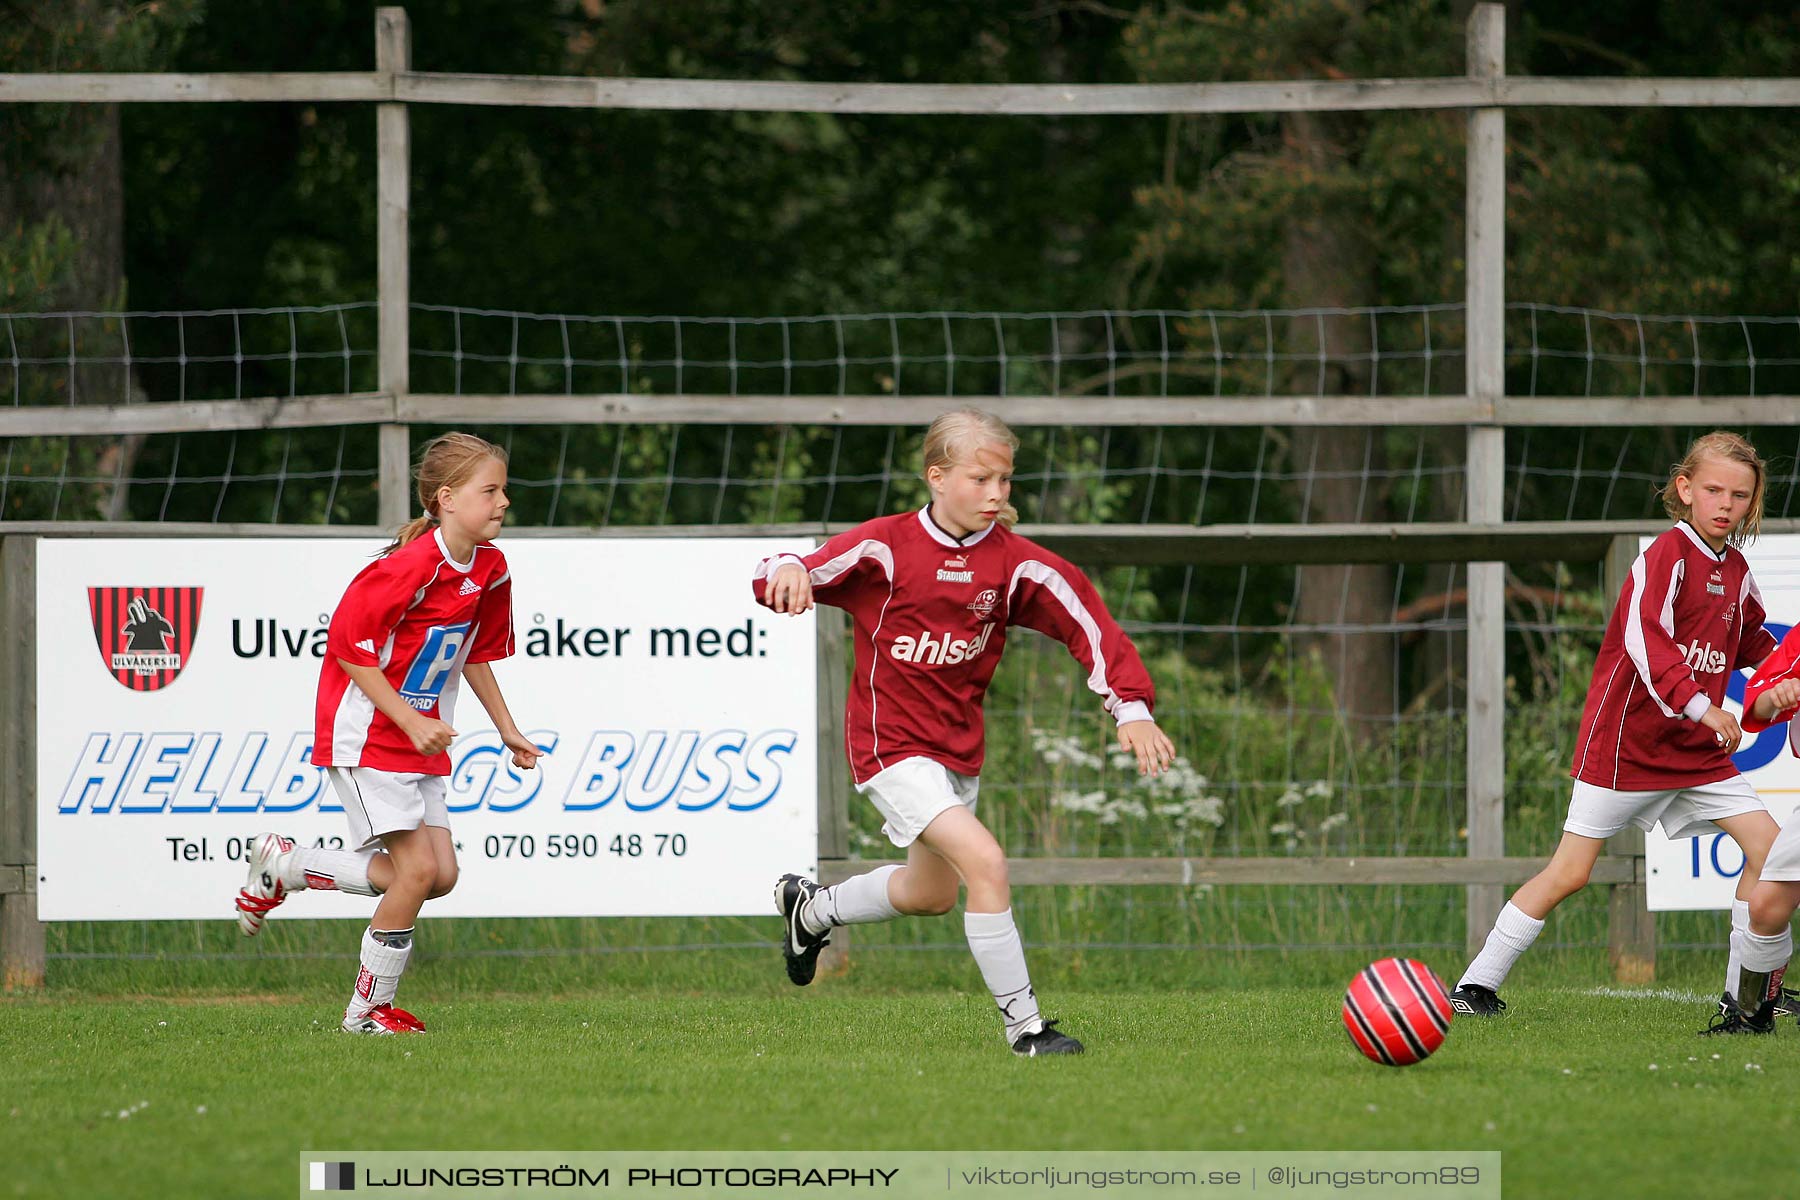 Ulvacupen 2006,mix,Åbrovallen,Ulvåker,Sverige,Fotboll,,2006,147412